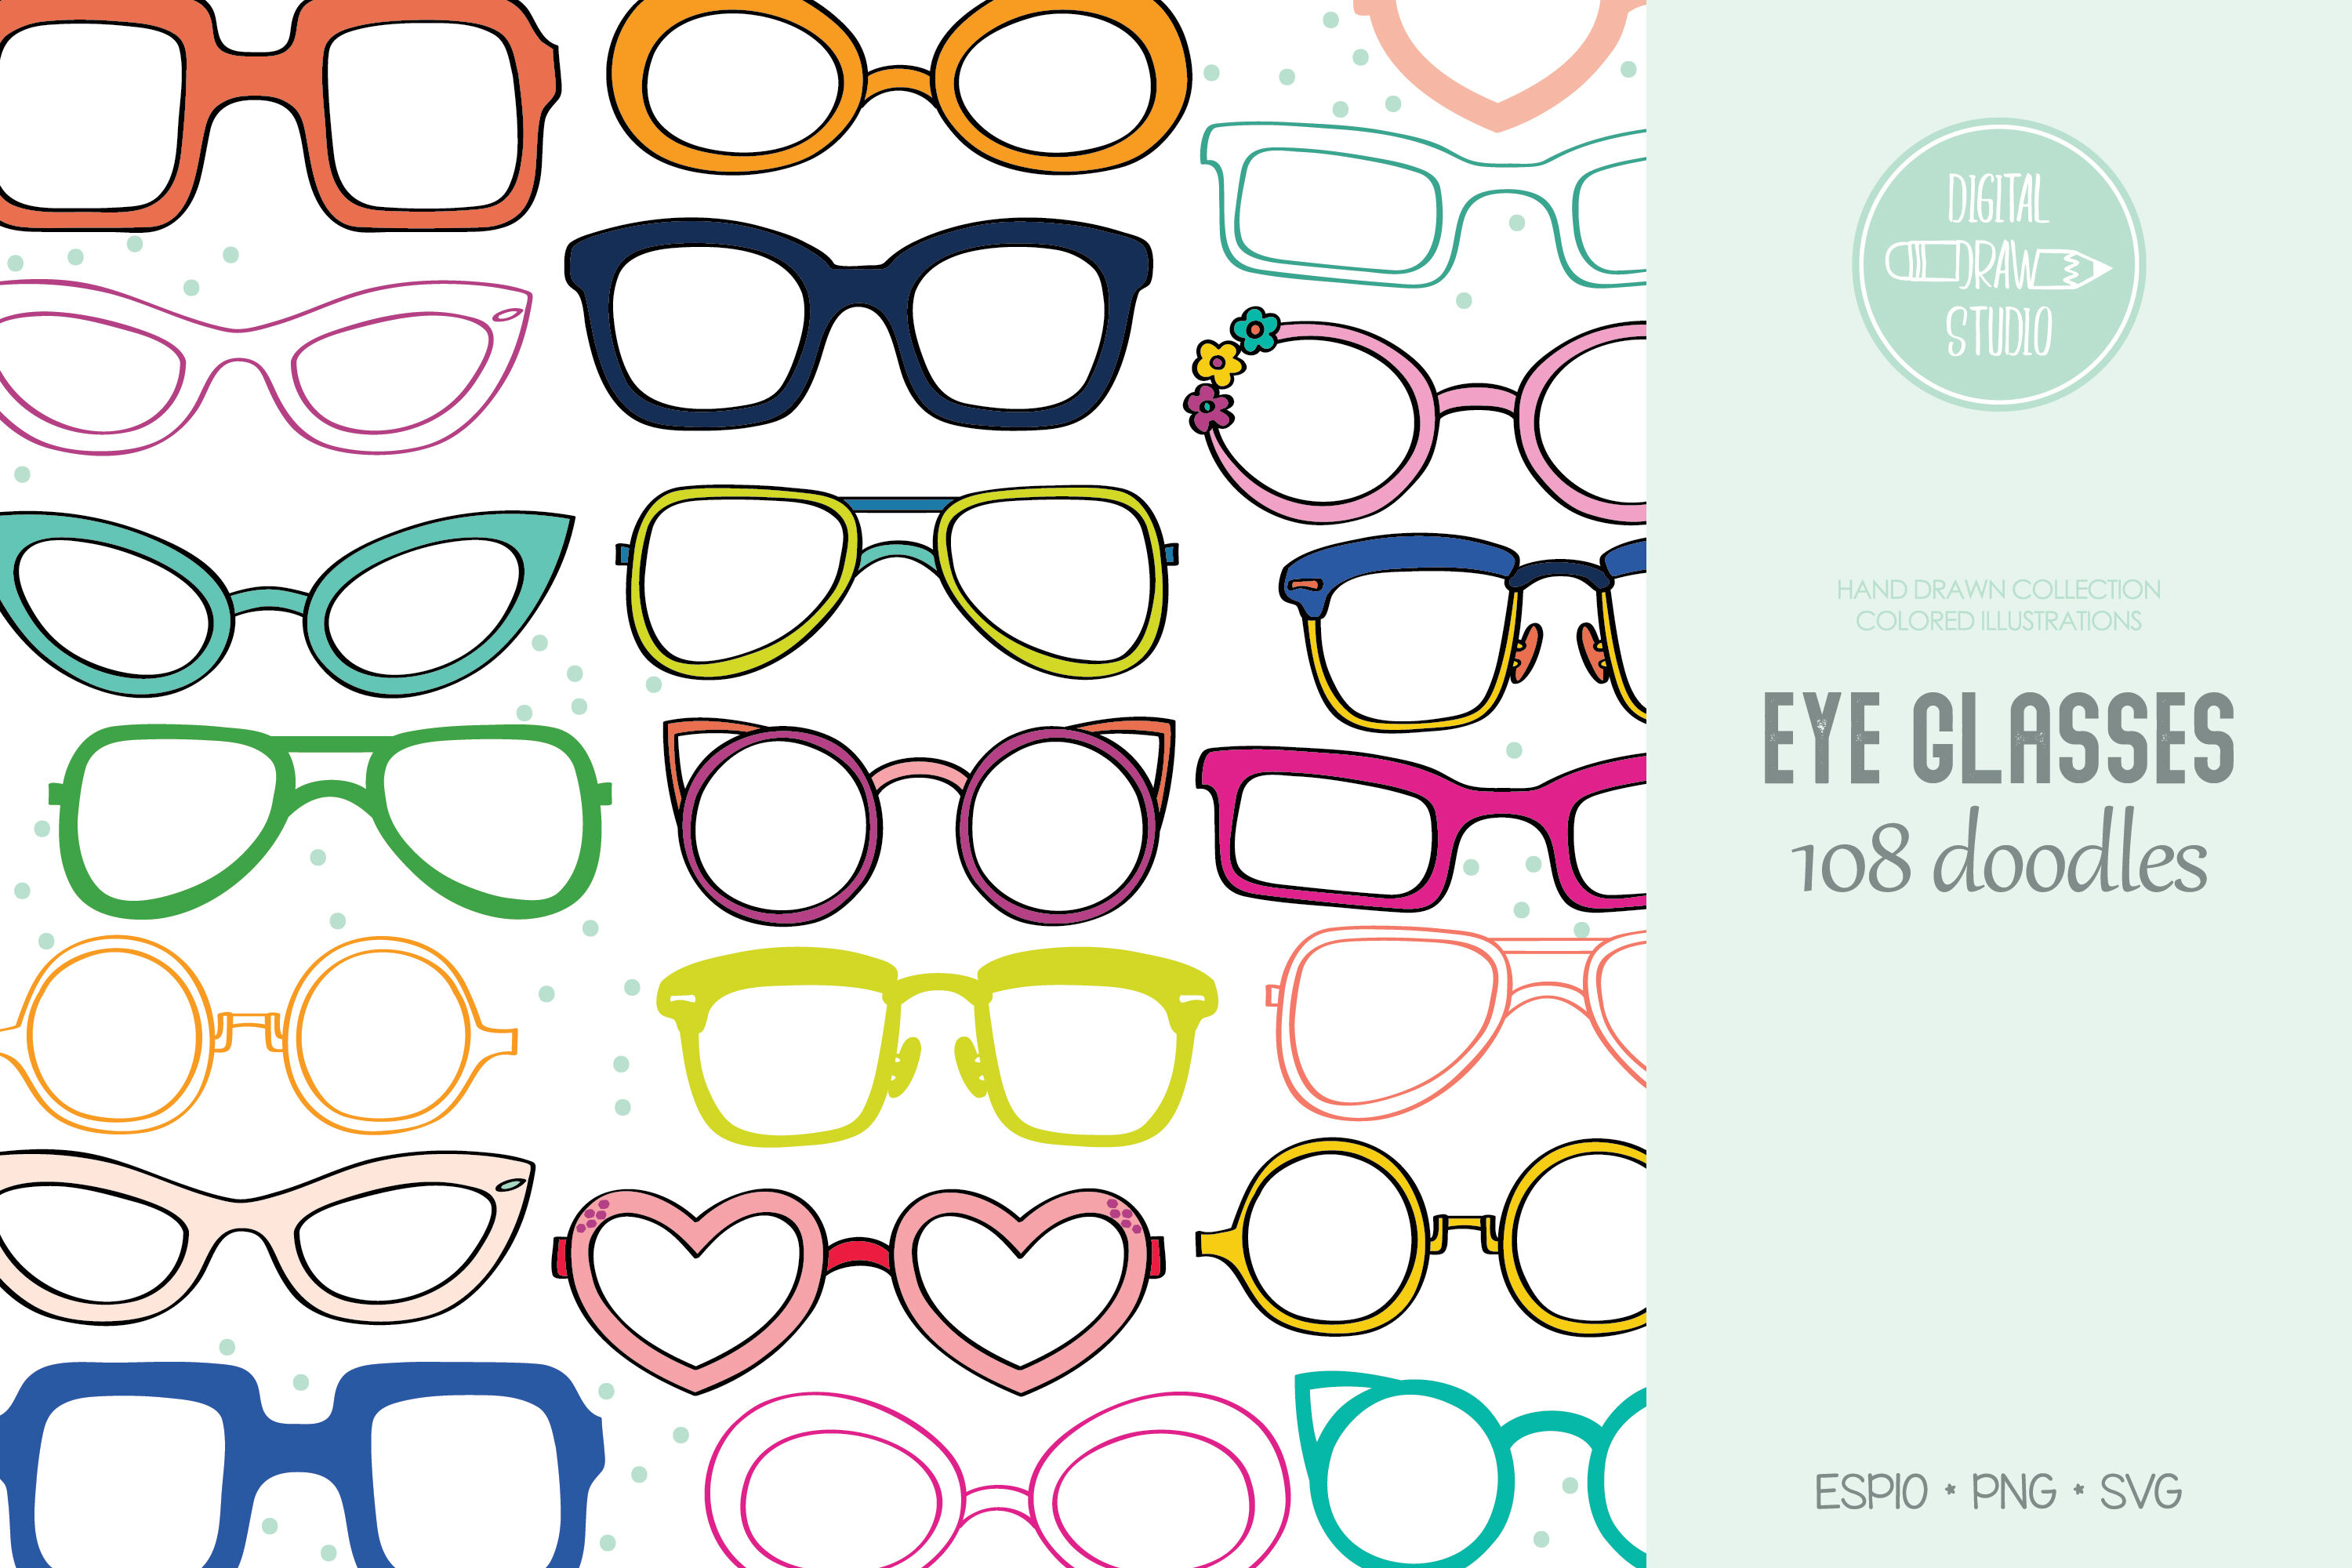 Glasses Nerd Frames Eye Wear Sunglasses Shades Color Illustration By Digital Draw Studio Thehungryjpeg Com